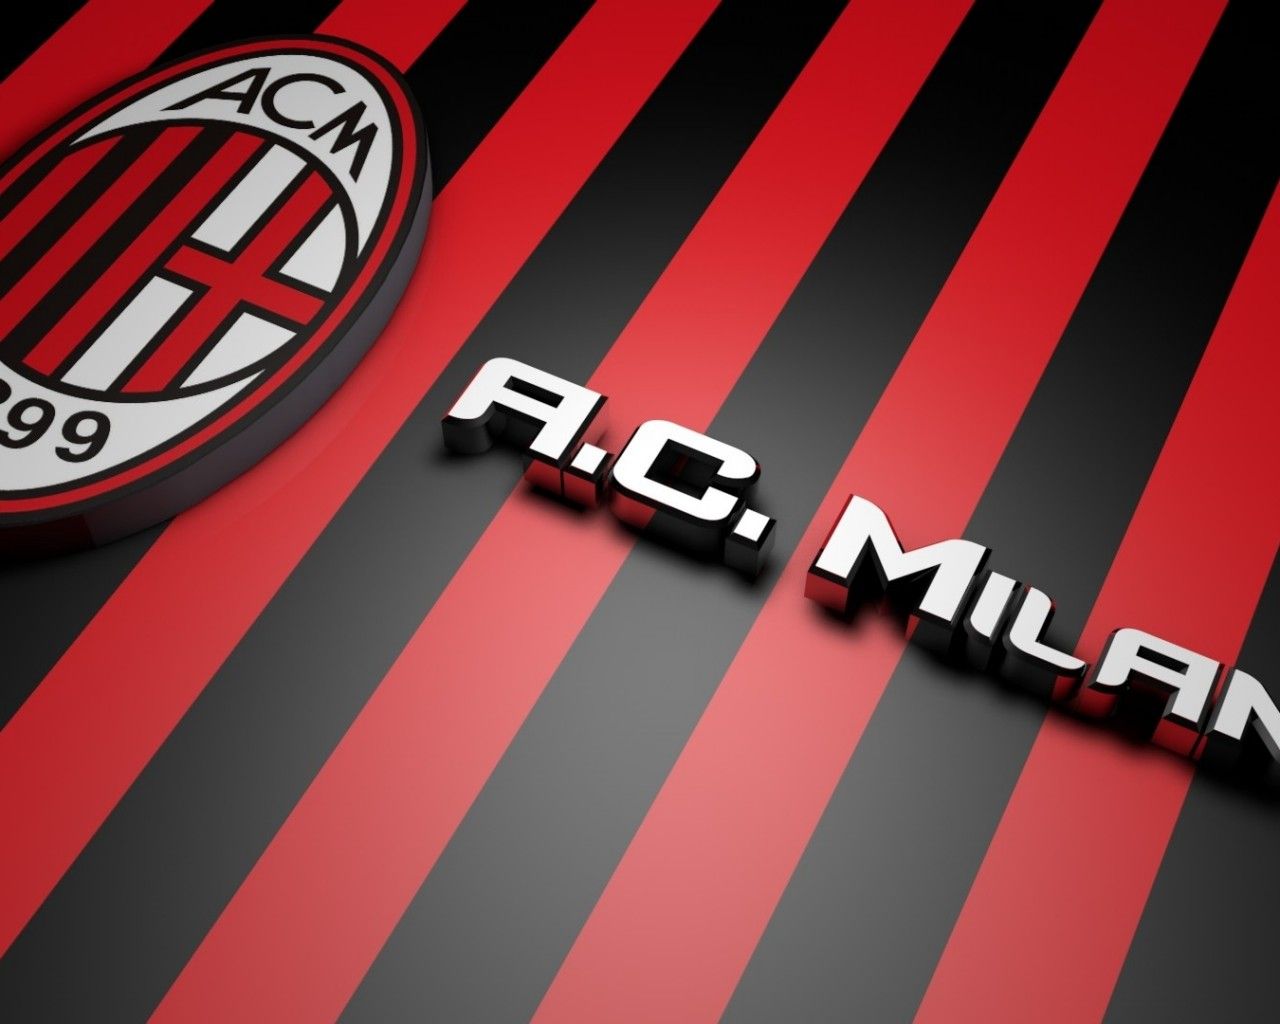 AC Milan 2014 3D Logo Wallpaper Wide or HD 3D Wallpapers 1280x1024